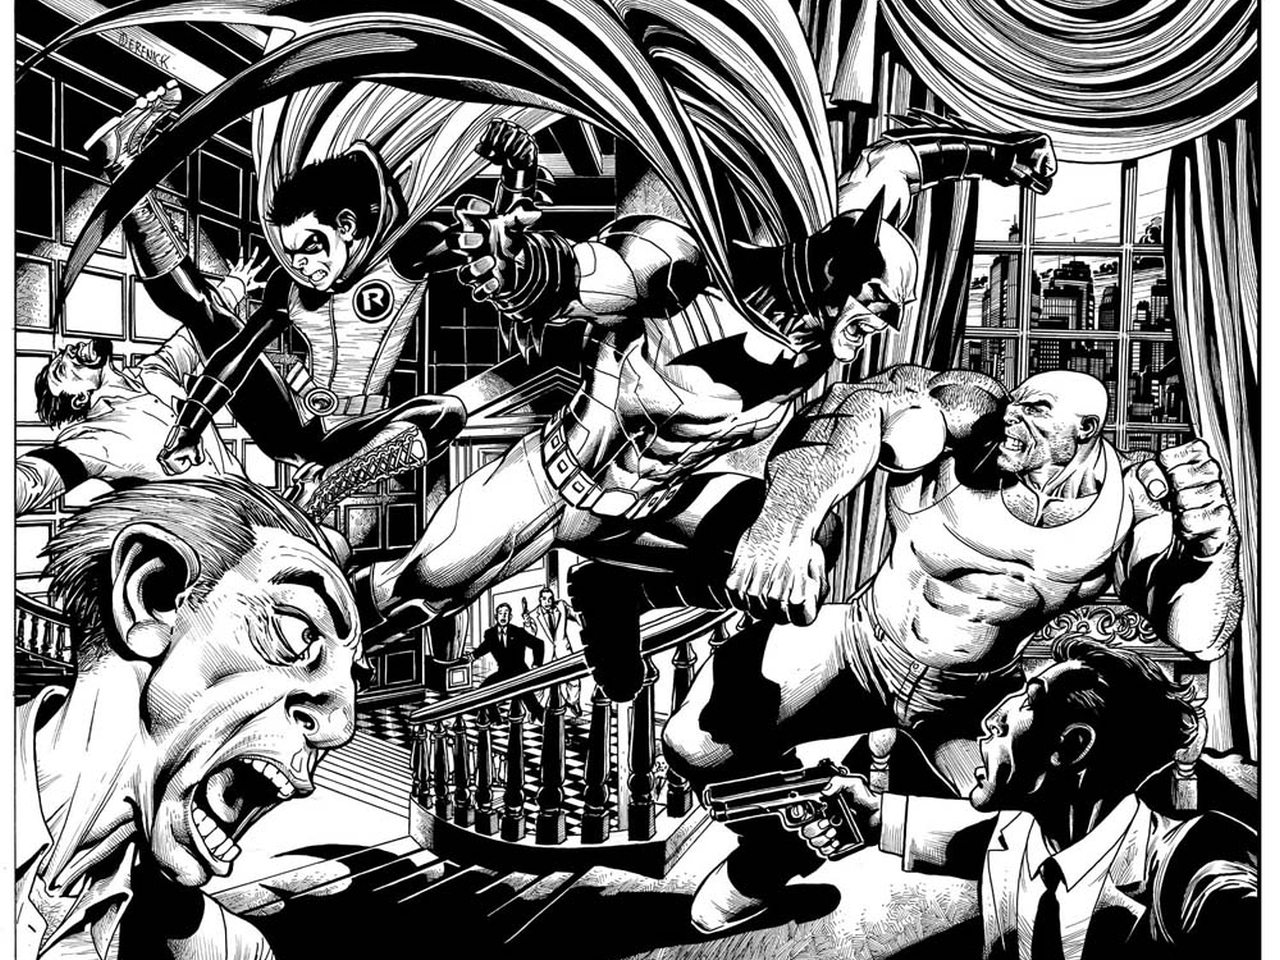 Скачать обои бесплатно Комиксы, Бэтмен, Комиксы Dc, Робин (Комиксы Dc), Дэмиэн Уэйн, Бэтмен И Робин картинка на рабочий стол ПК